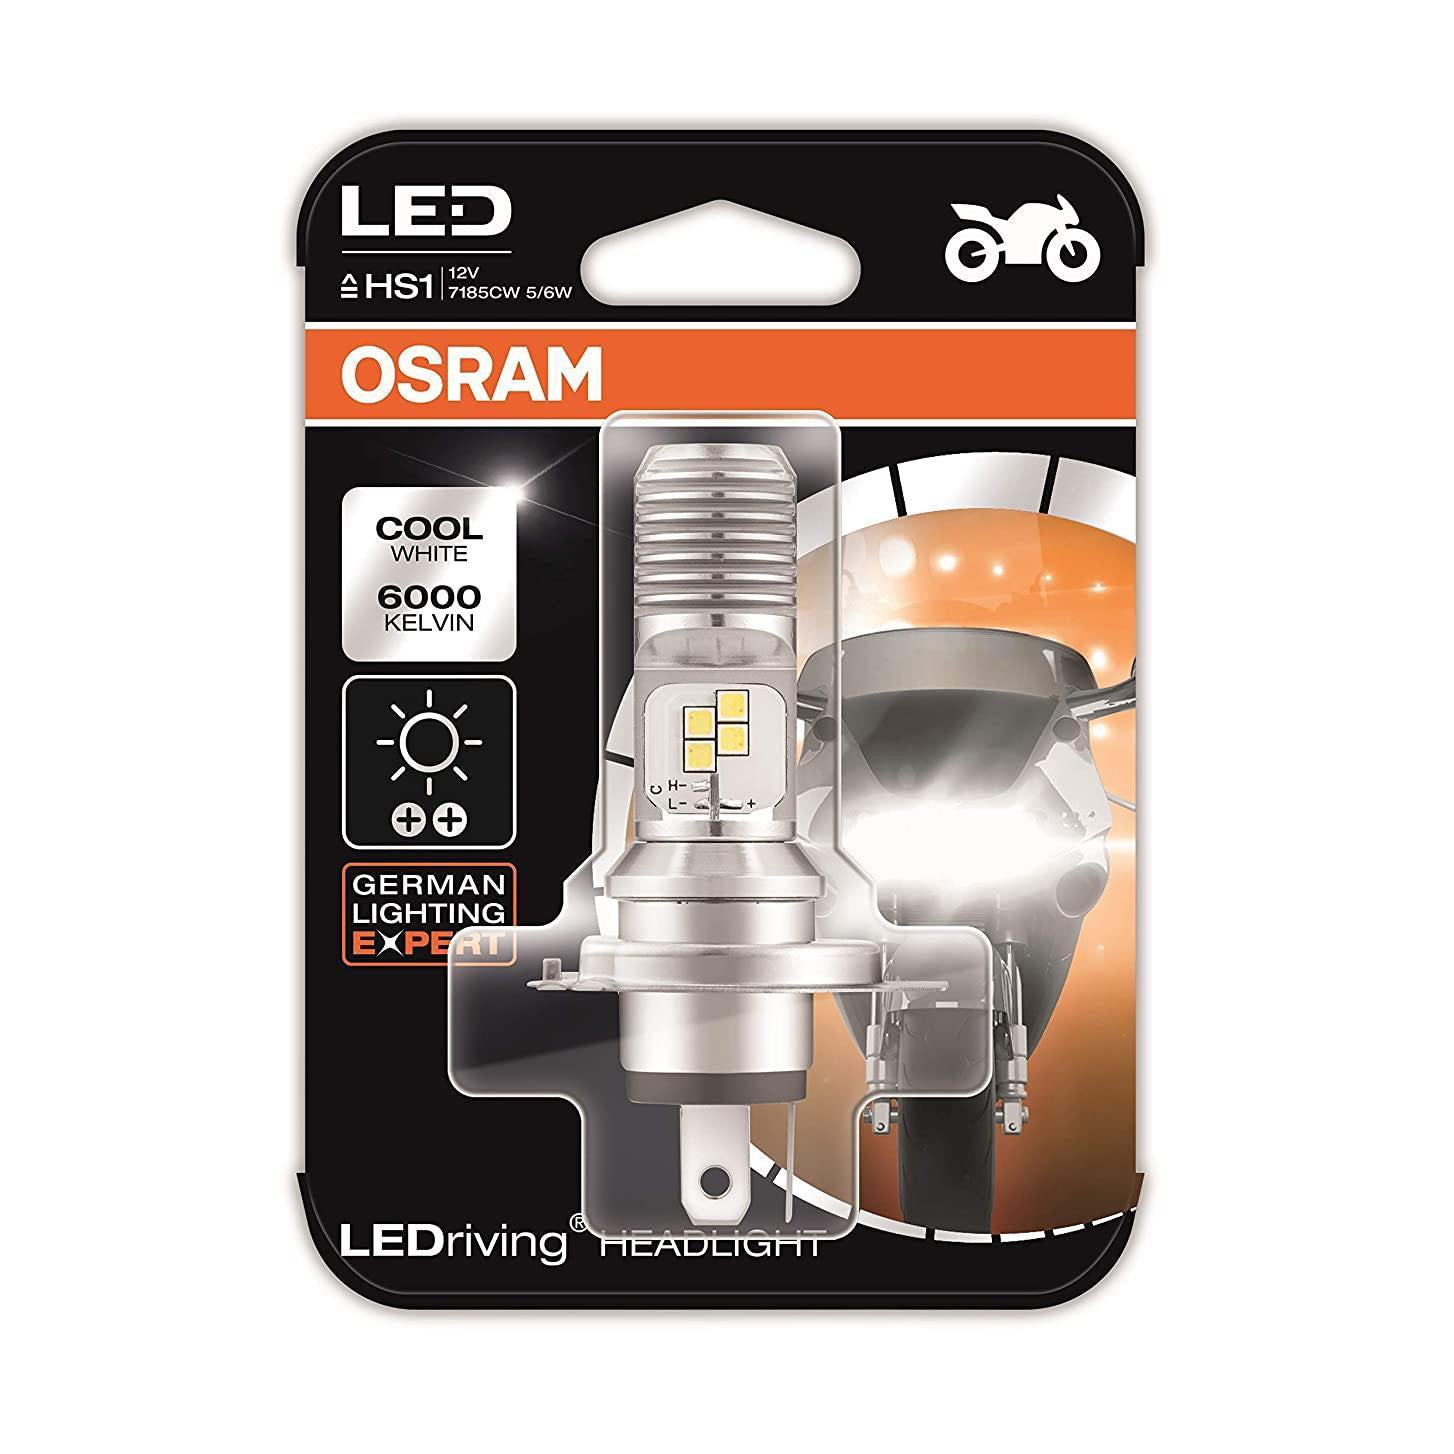 Osram LED Driving Headlight HS1 7185CW 5/6W 12V PX43T Blister Pack – CARMATE ®